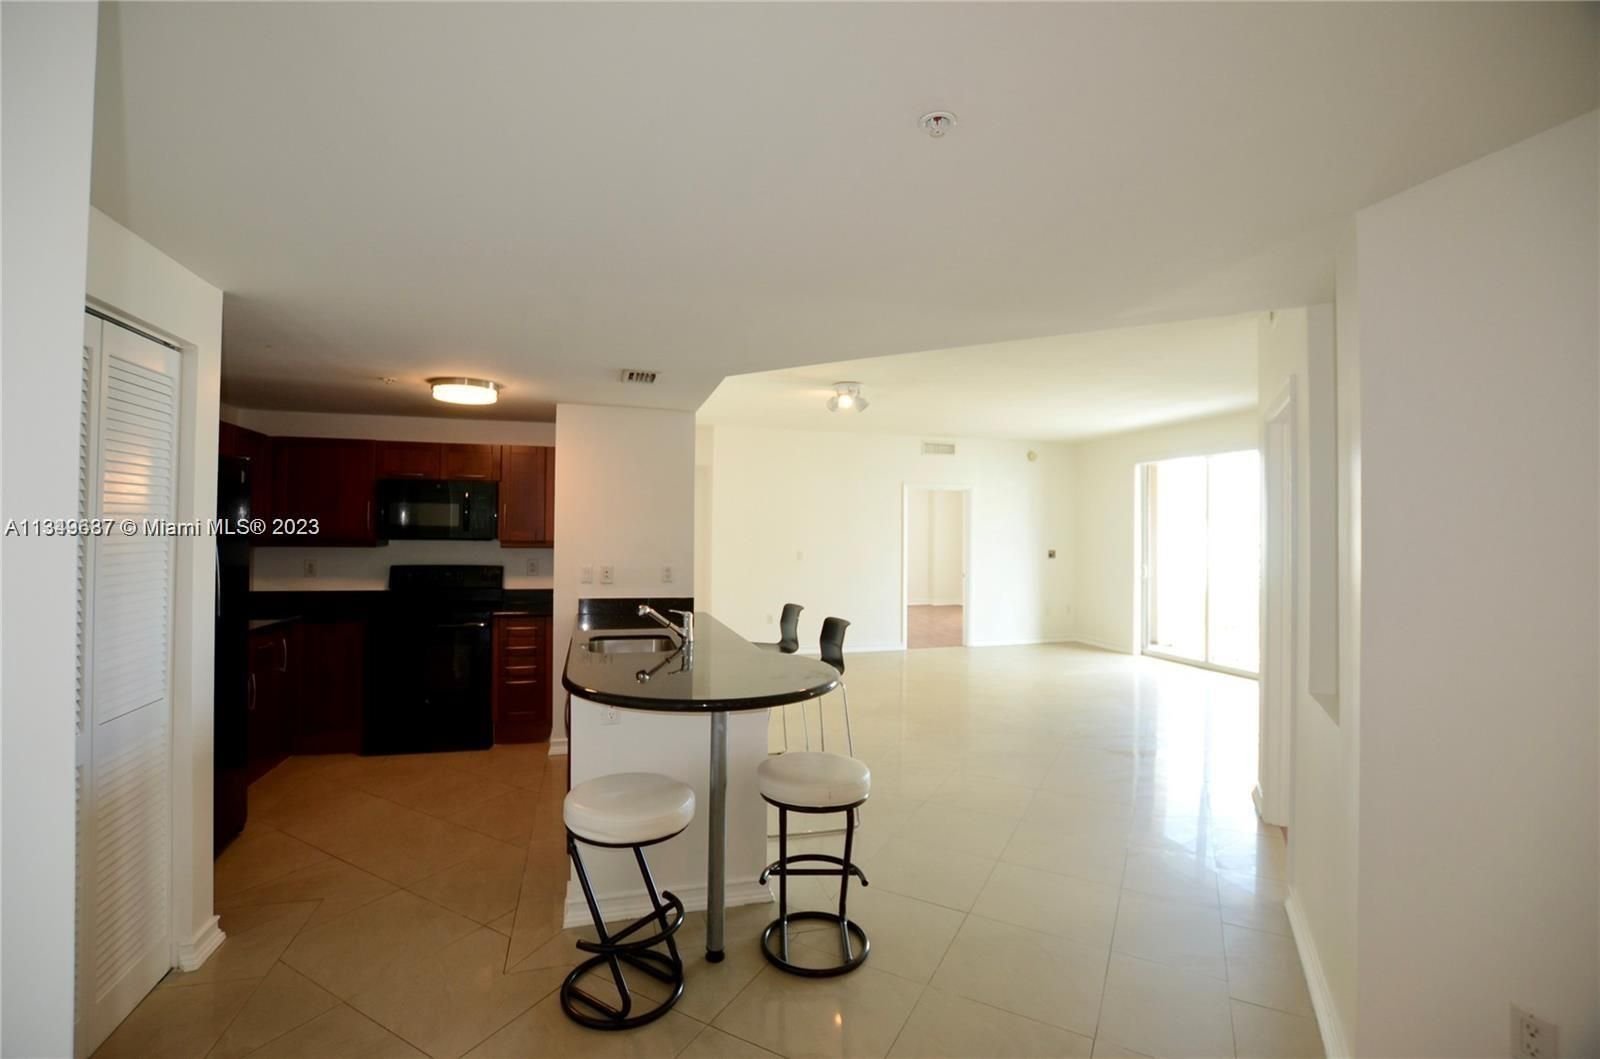 Real estate property located at 7270 88th St B406, Miami-Dade County, Miami, FL